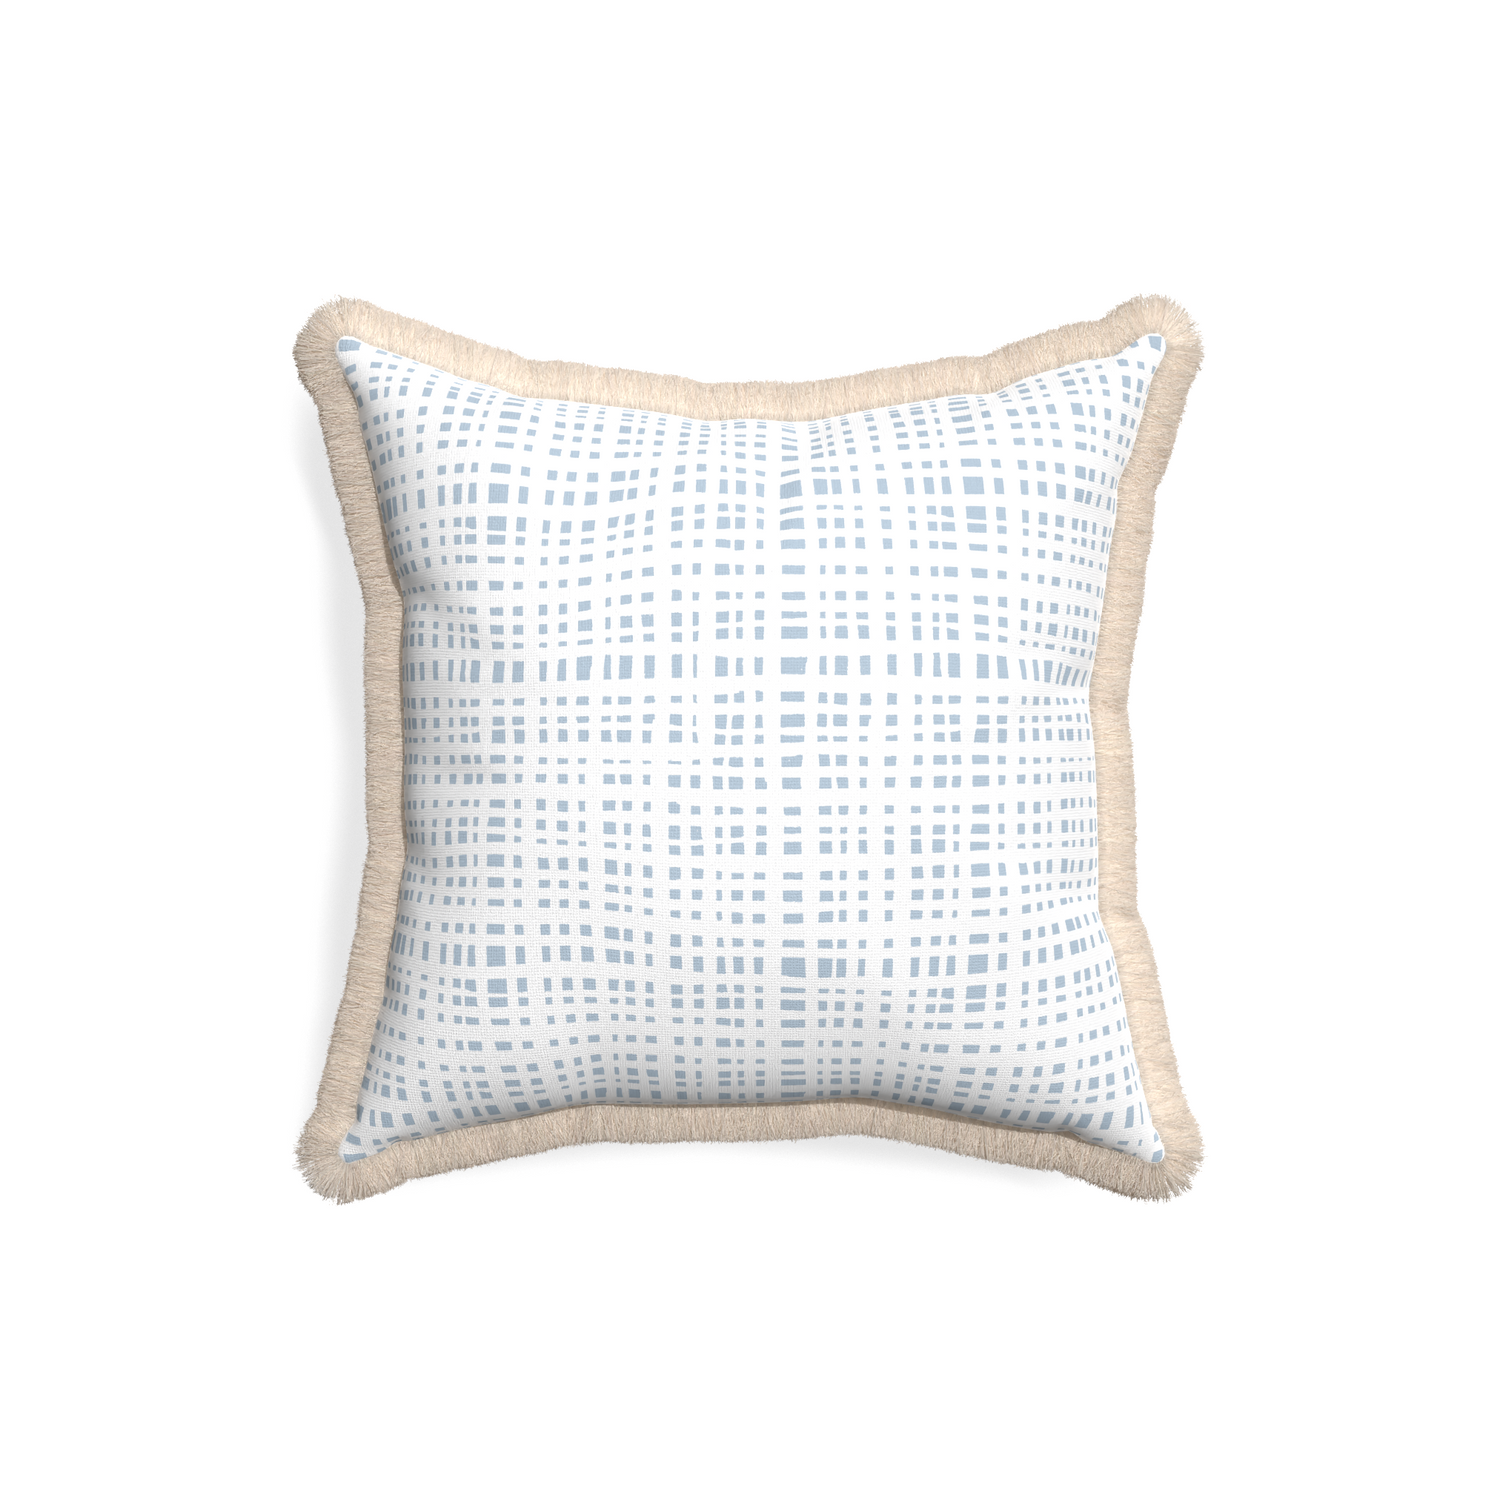 18-square ginger sky custom pillow with cream fringe on white background